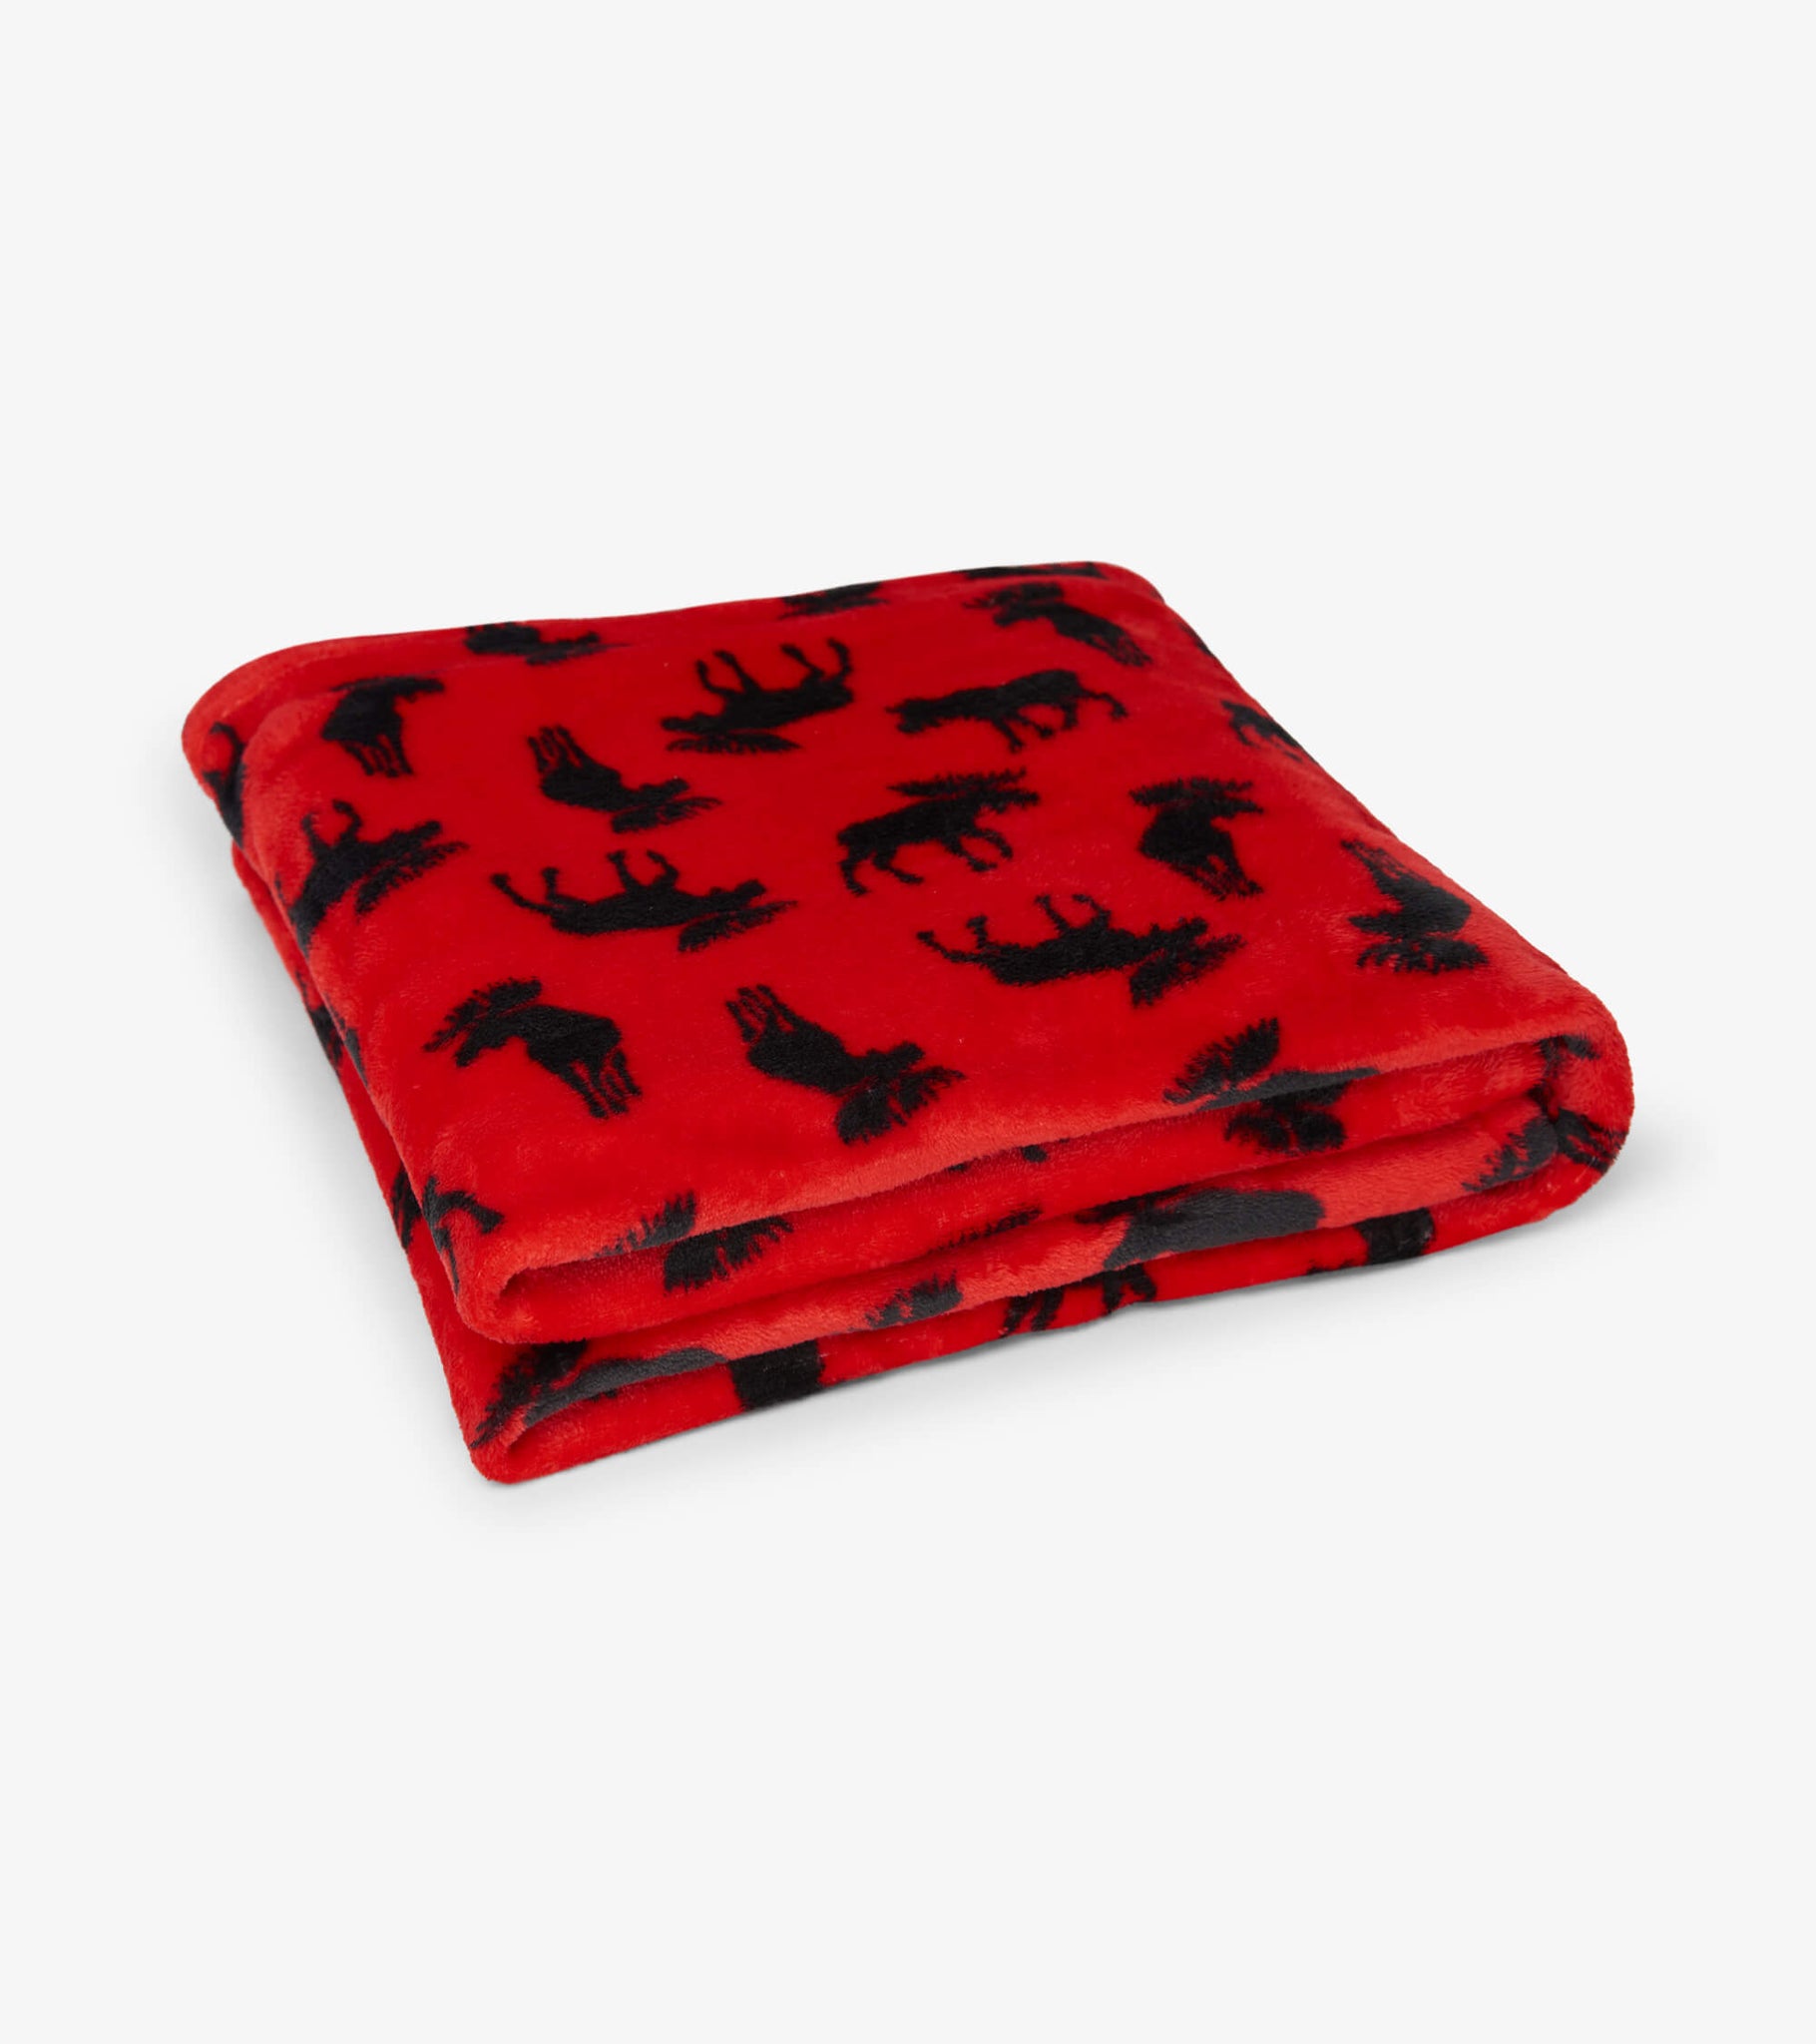 Moose on Red Blanket